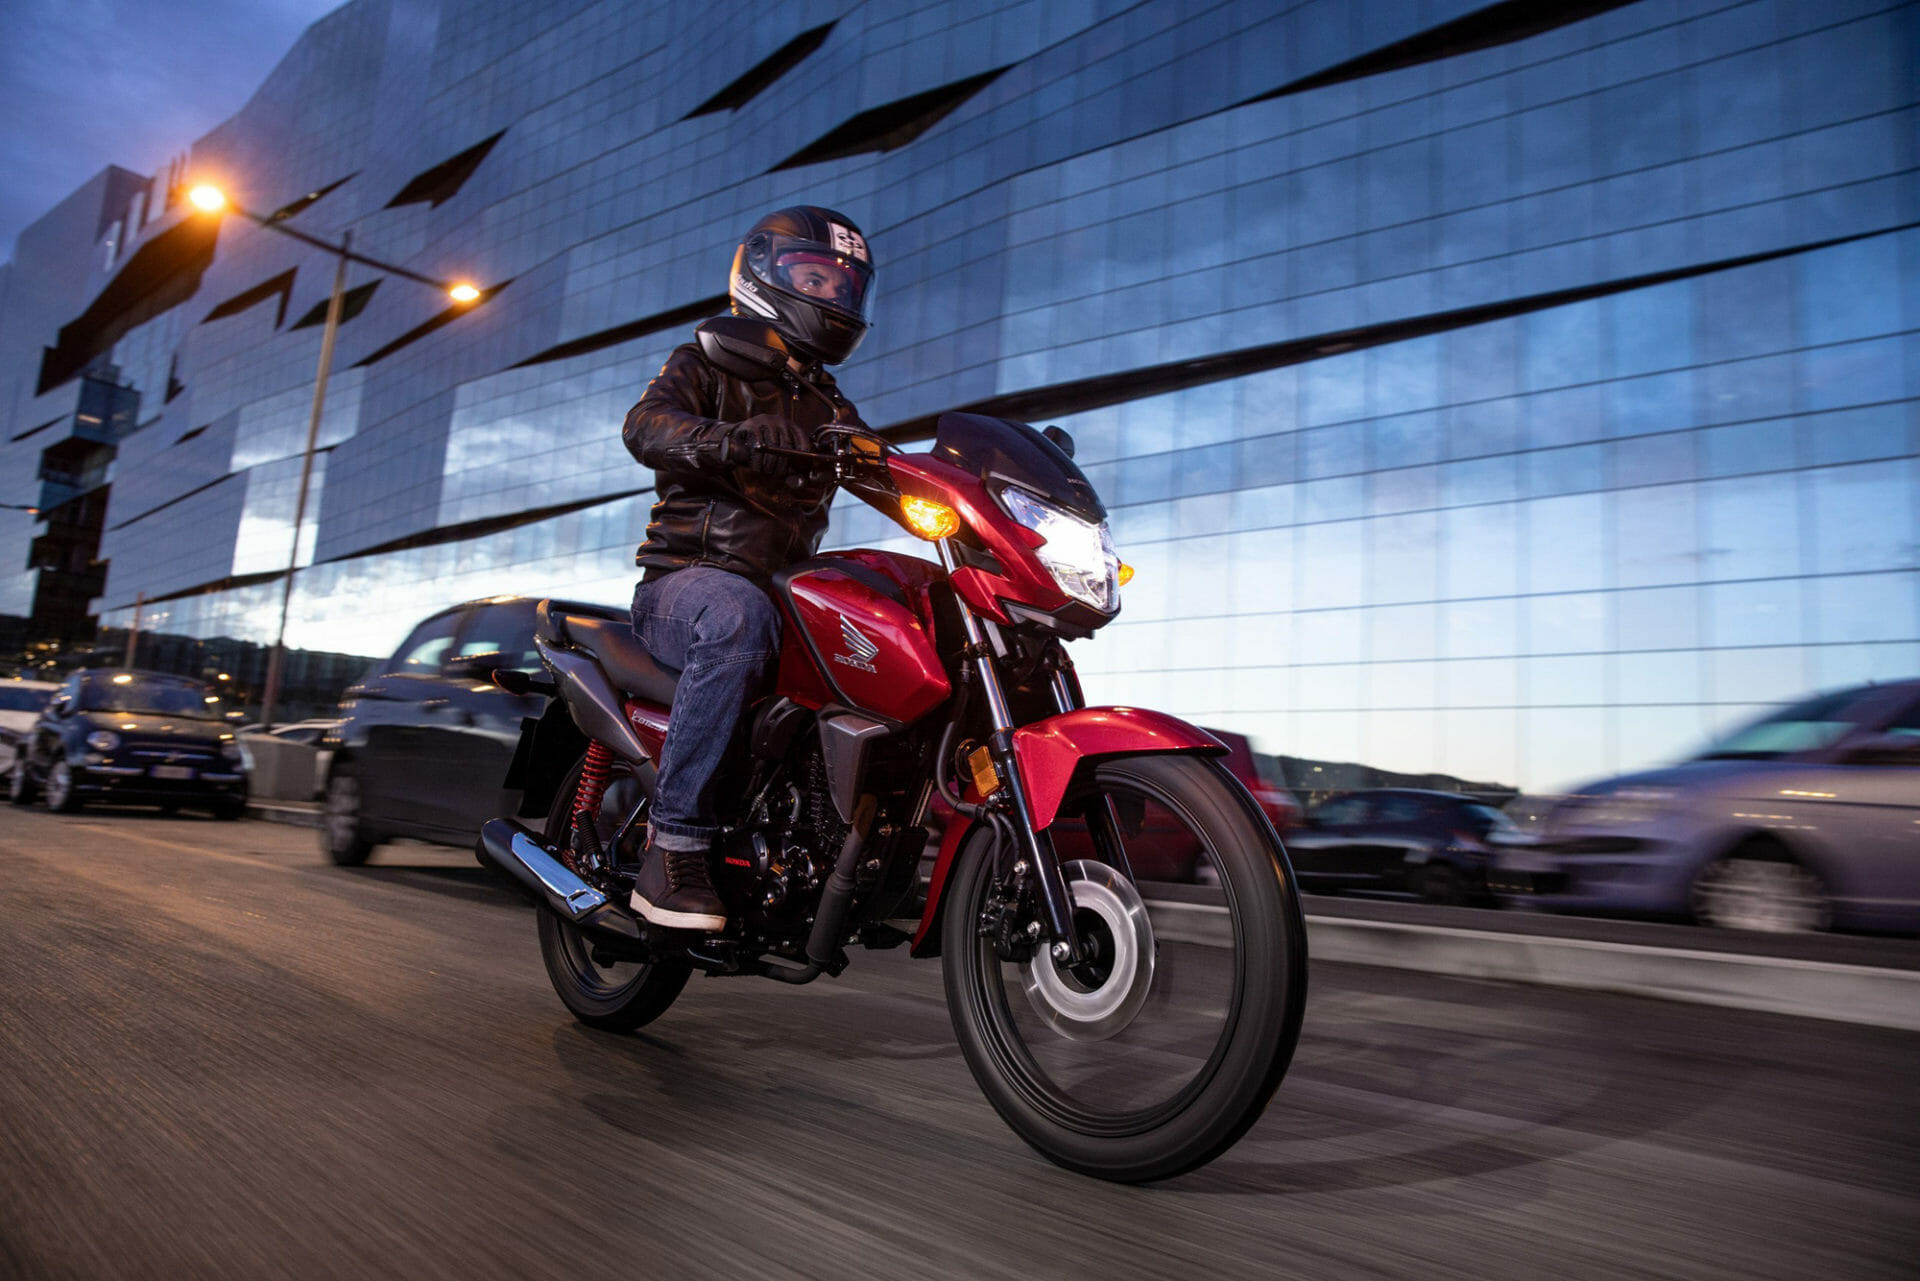 Honda Cb 125 F 2021 Has Slimmed Down Motorcycles News Motorcycle Magazine